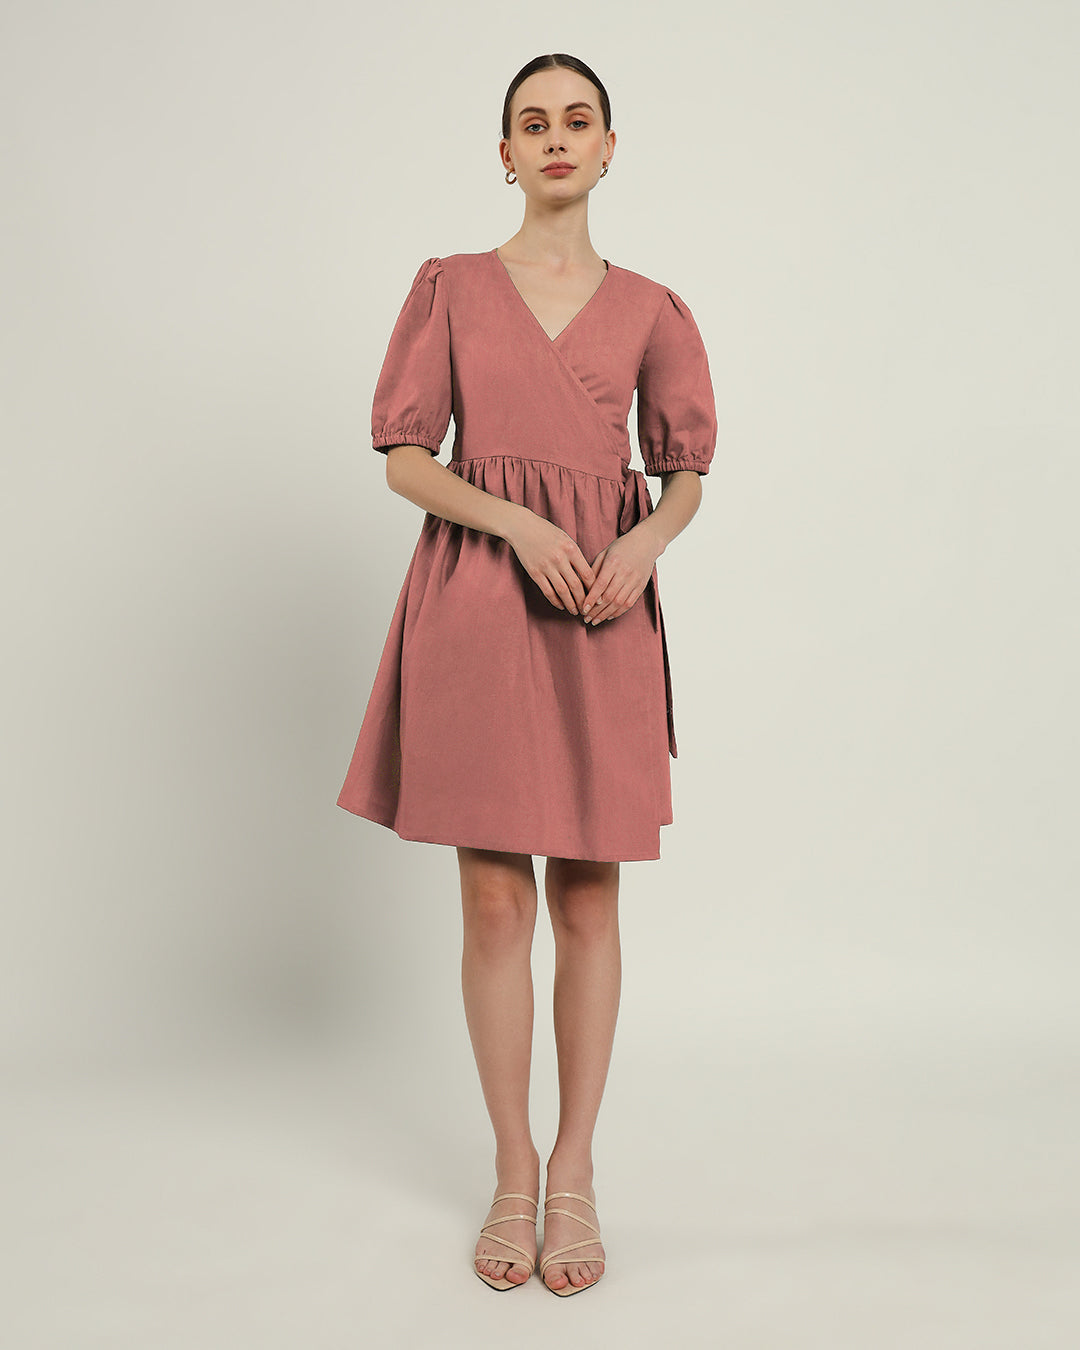 The Inzai Ivory Pink Cotton Dress